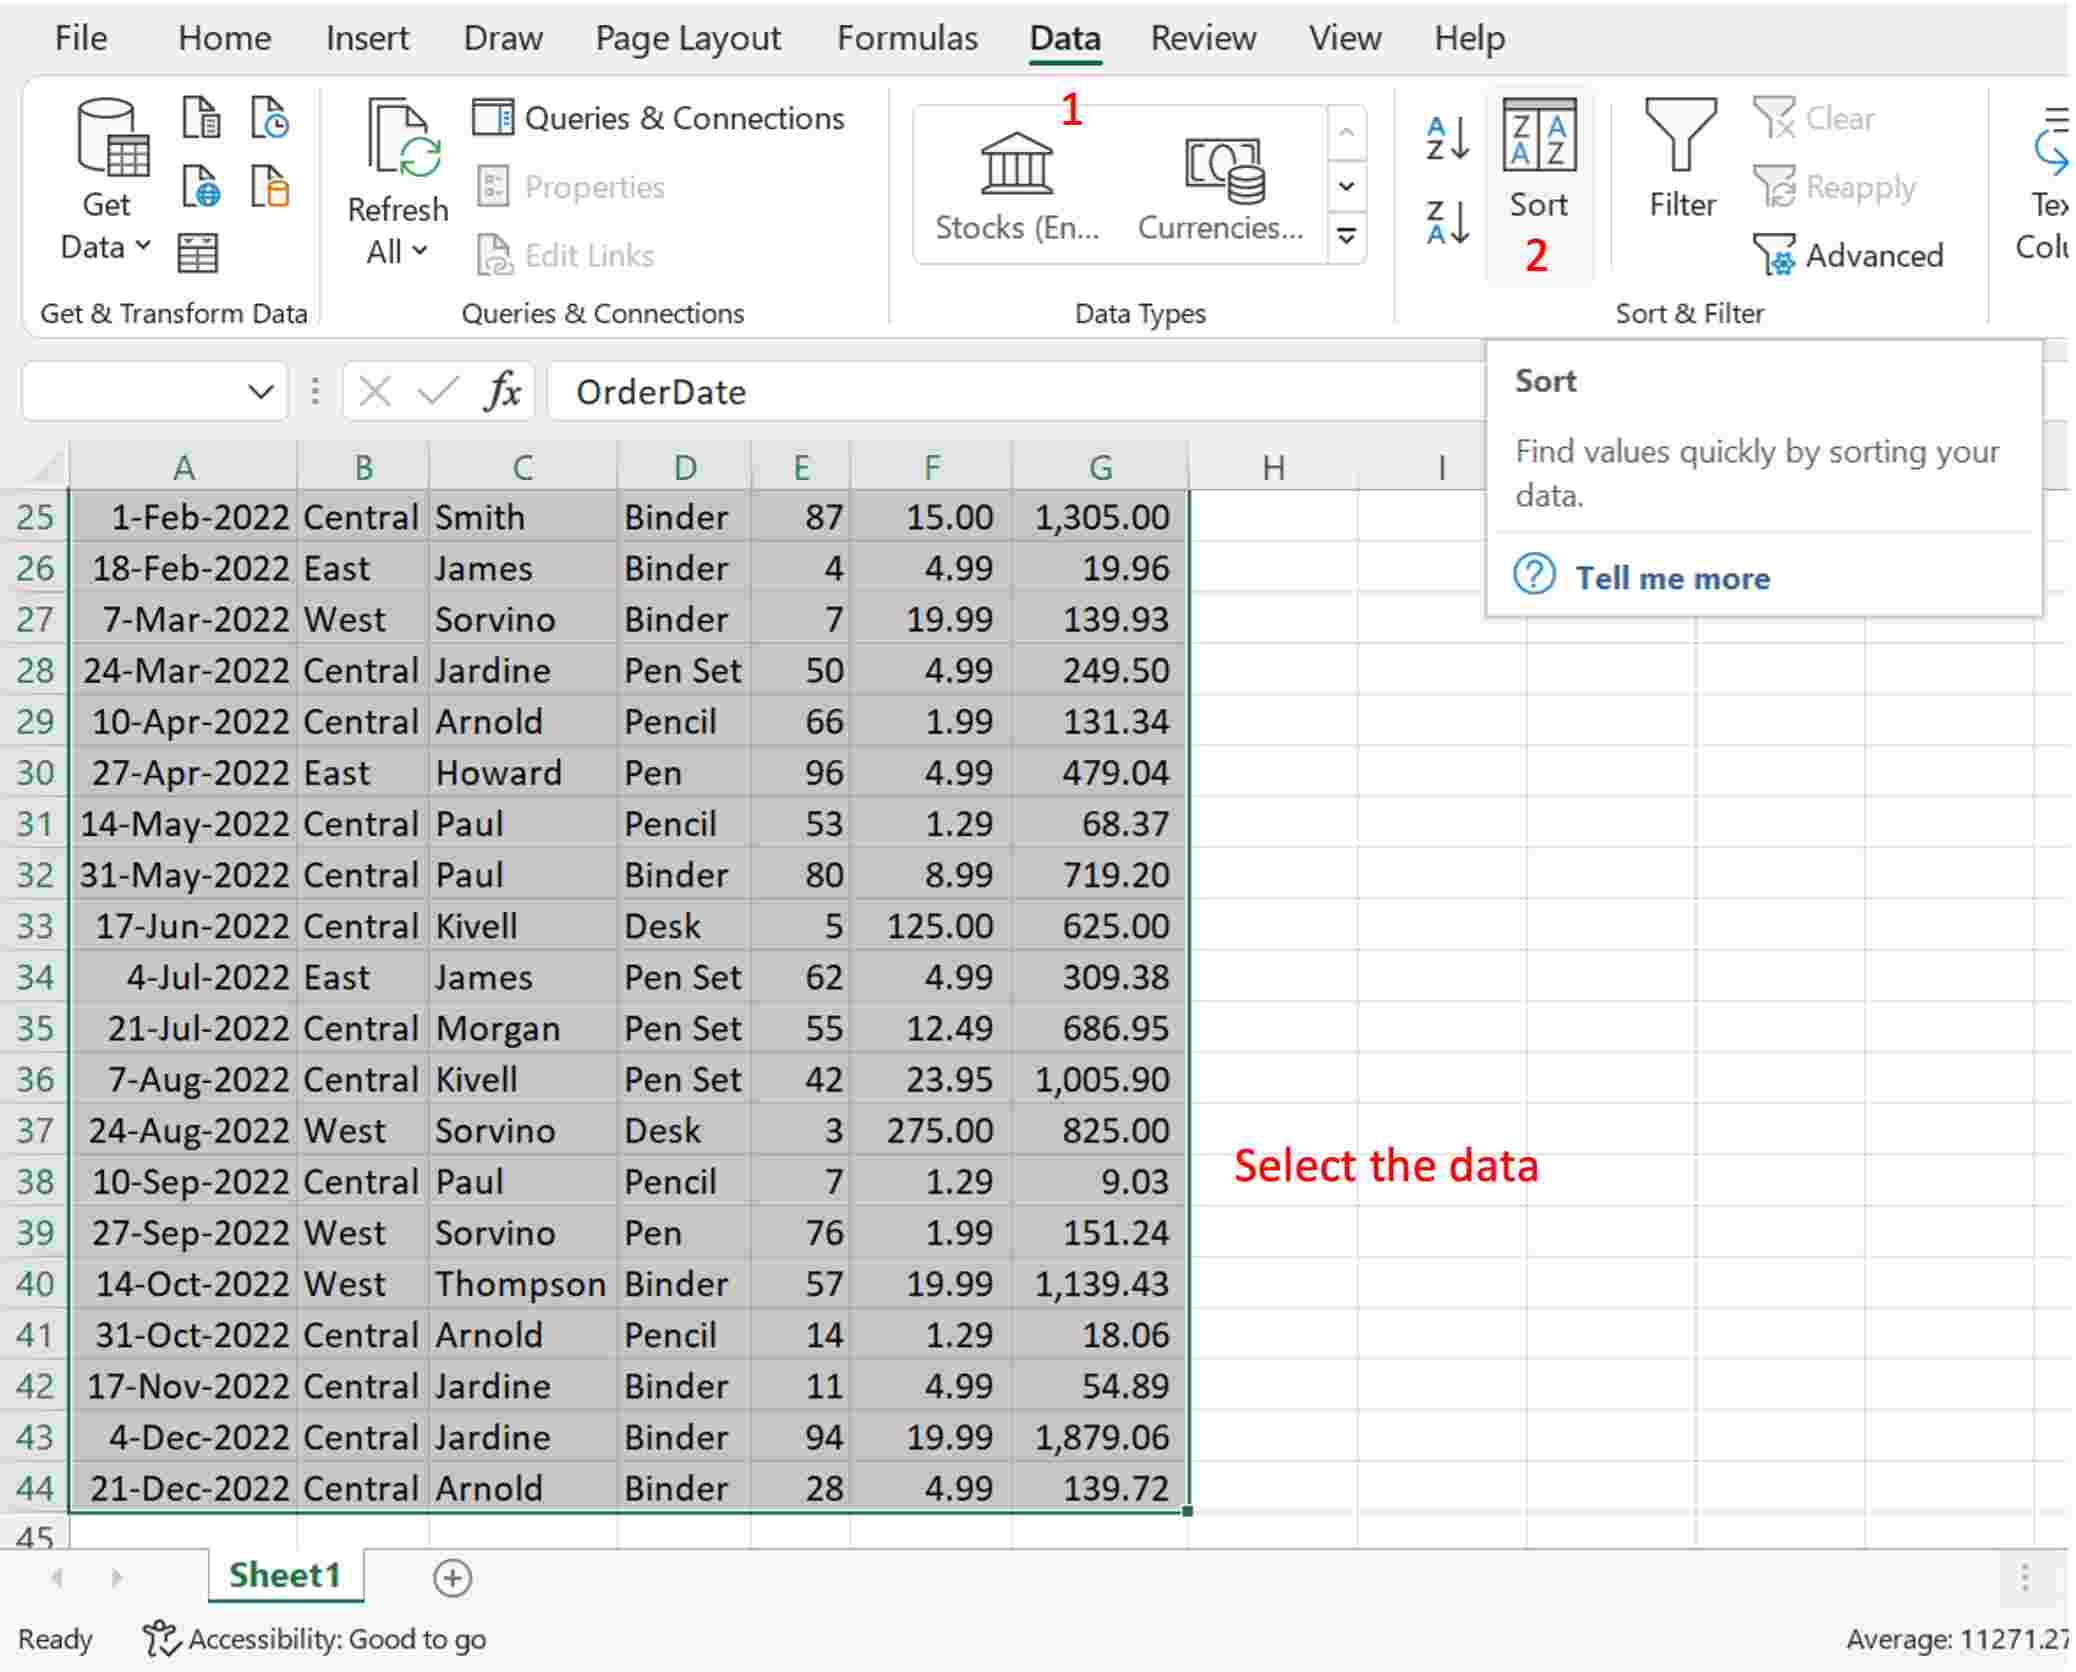 Sorting DAta in Excel